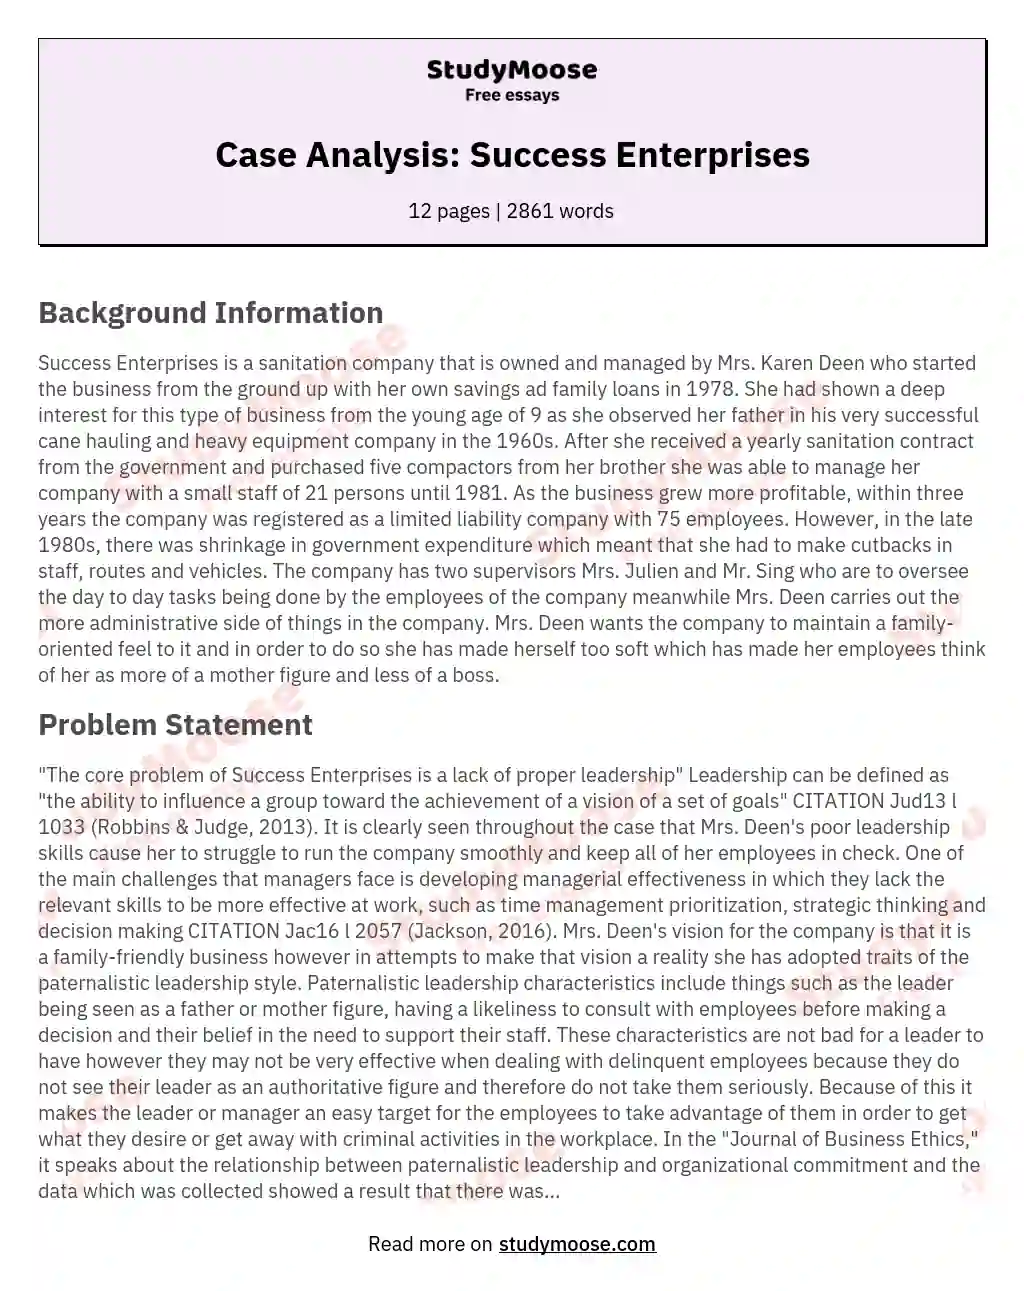 Case Analysis: Success Enterprises essay